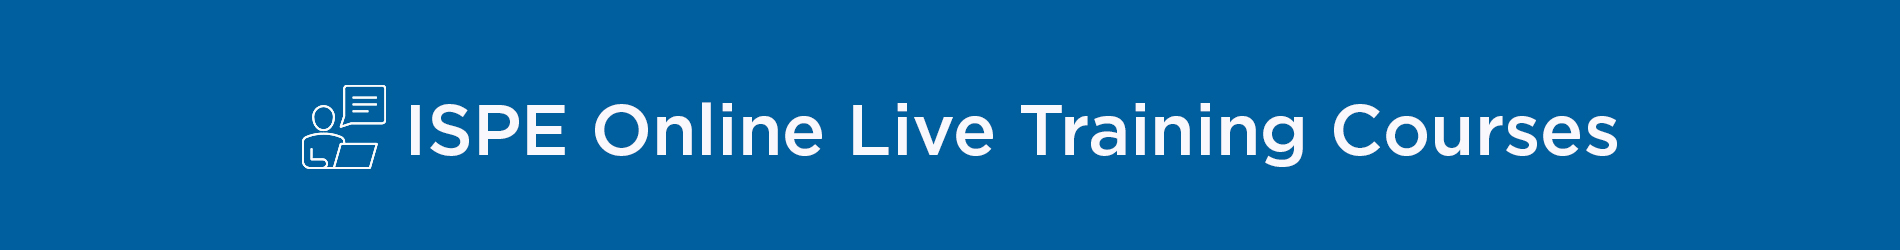 Online Live Training banner